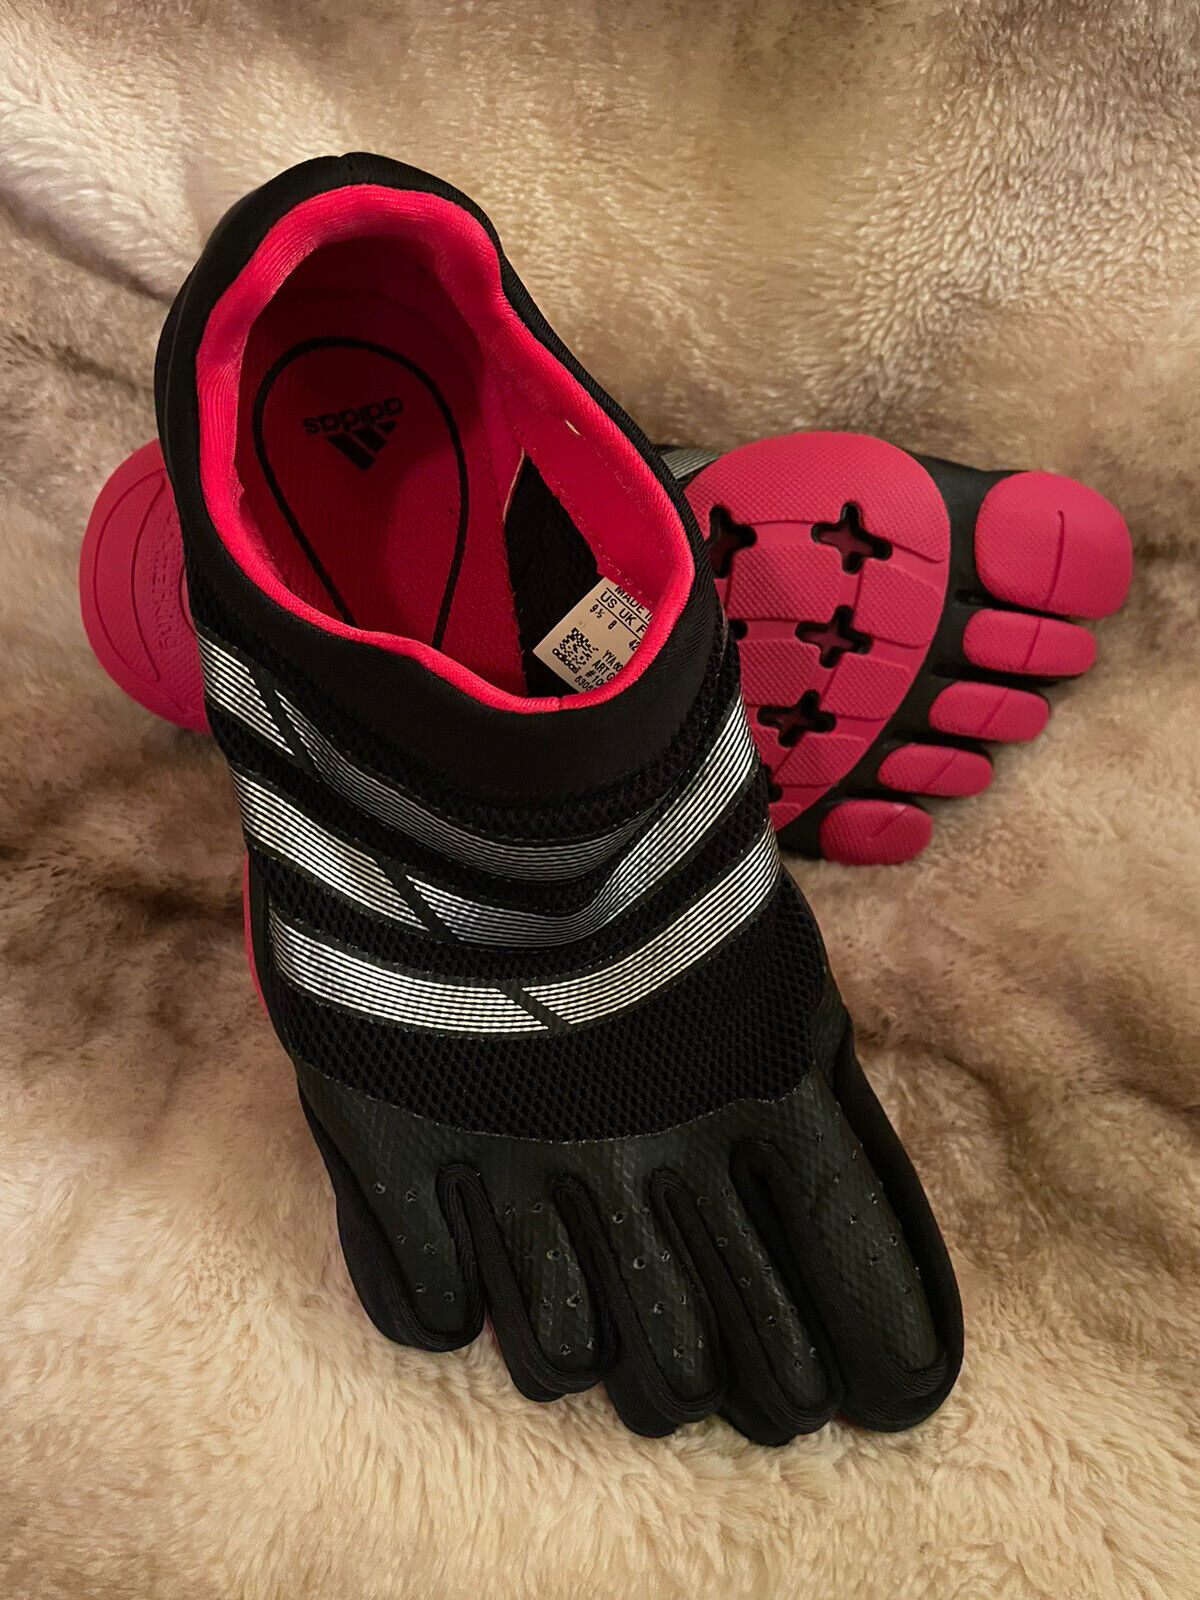 lago Desfiladero Materialismo Adidas adipure barefoot trainers Size 9.5 | eBay